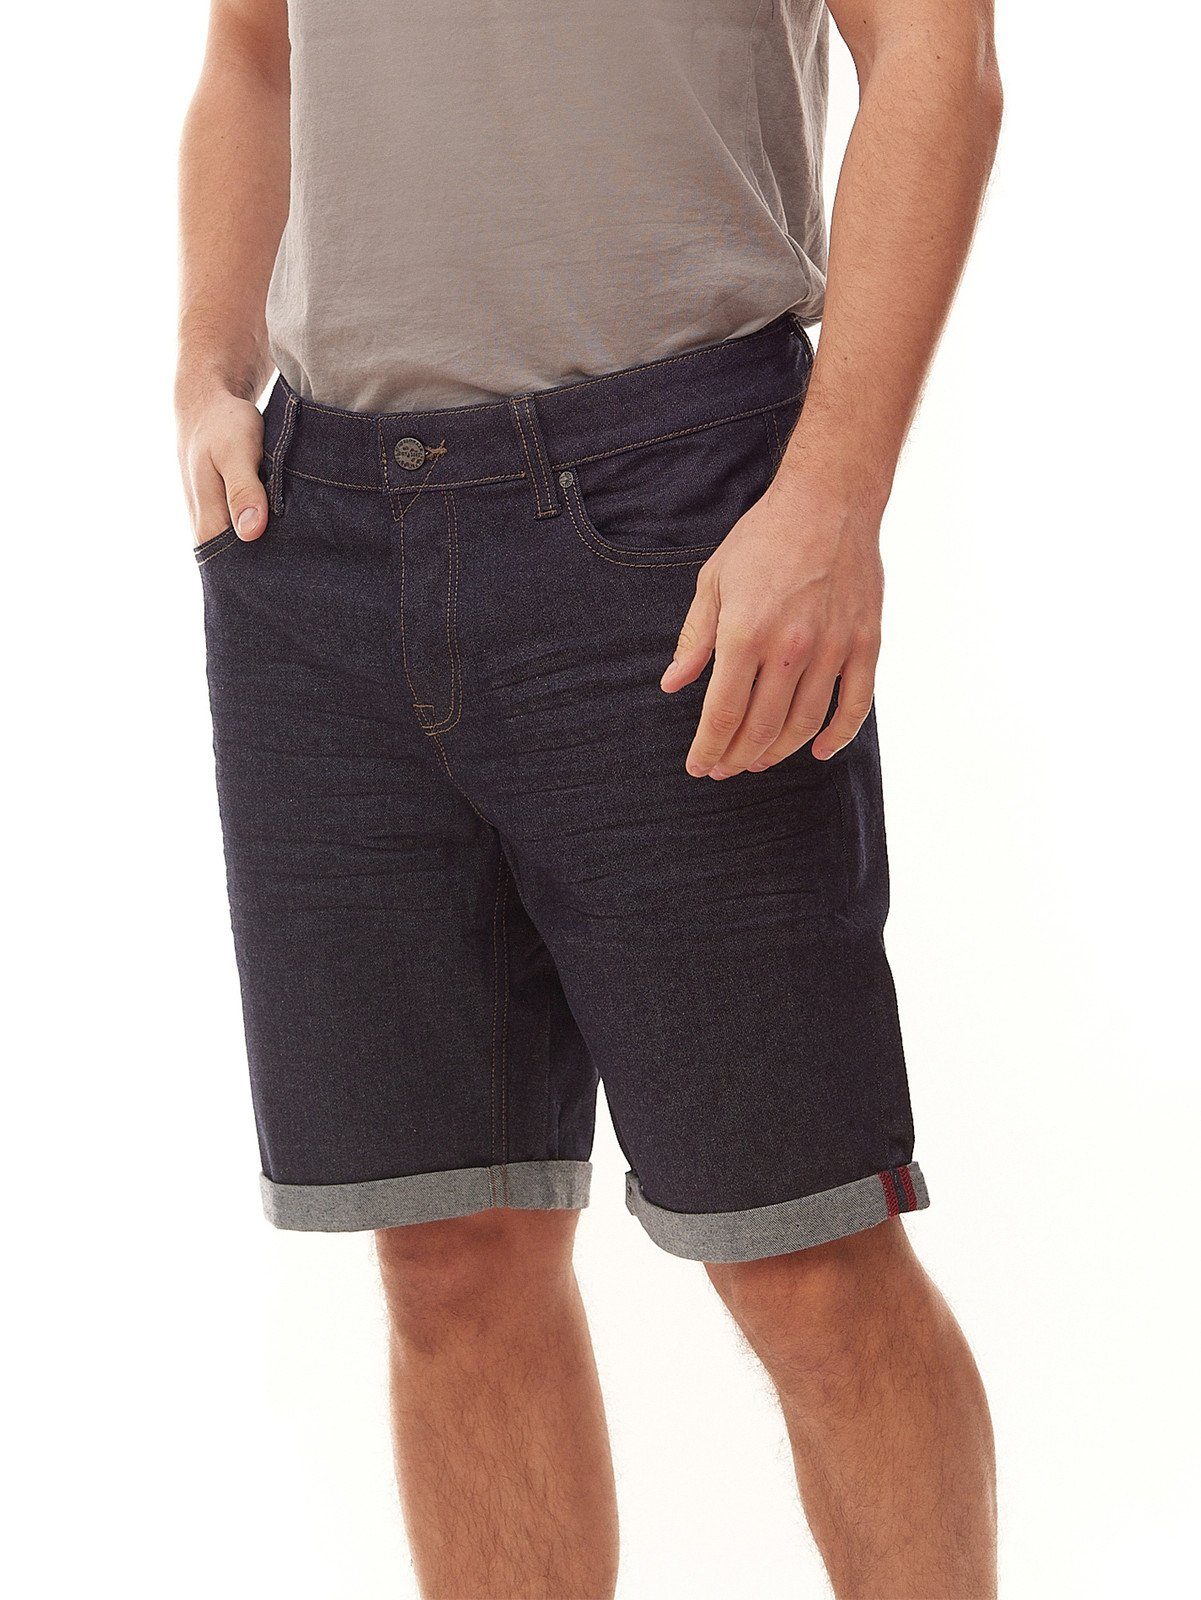 & Stoffhose ONLY Herren Reg SONS Dunkelblau Jeans-Shorts Ply & ONLY Bermuda SONS